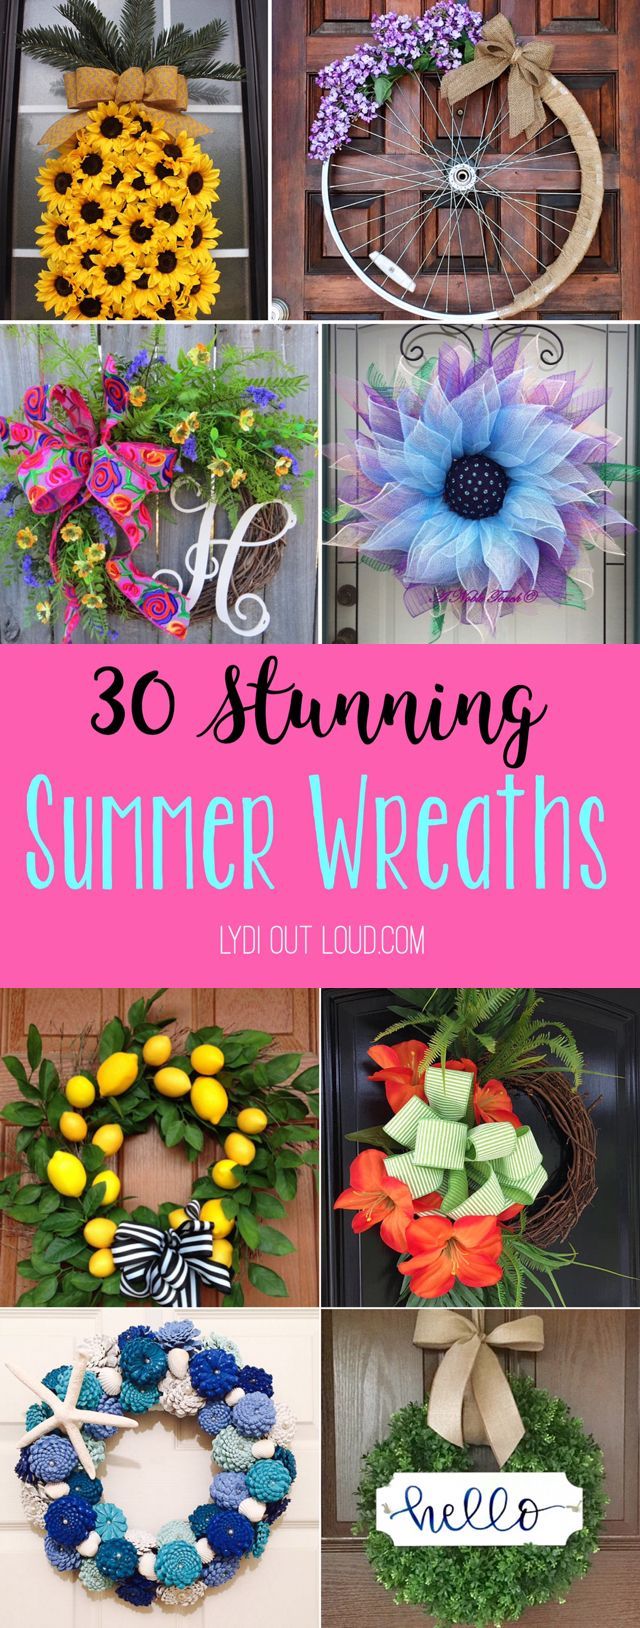 30 Stunning Summer Wreaths to Buy or DIY!